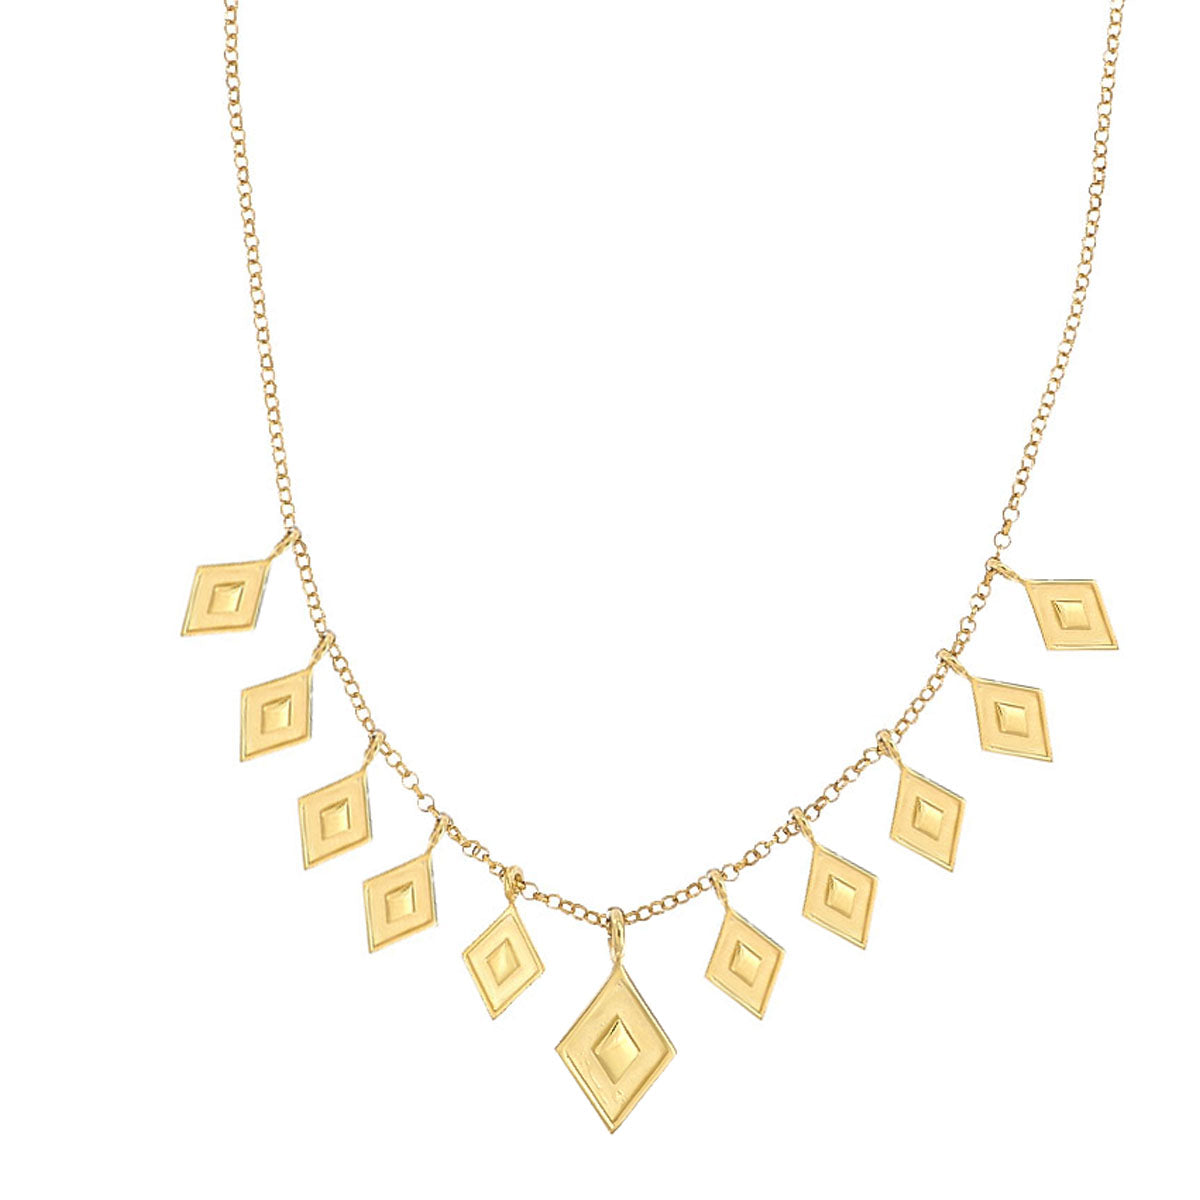 Erifili necklace silver 925° by Pearl Martini